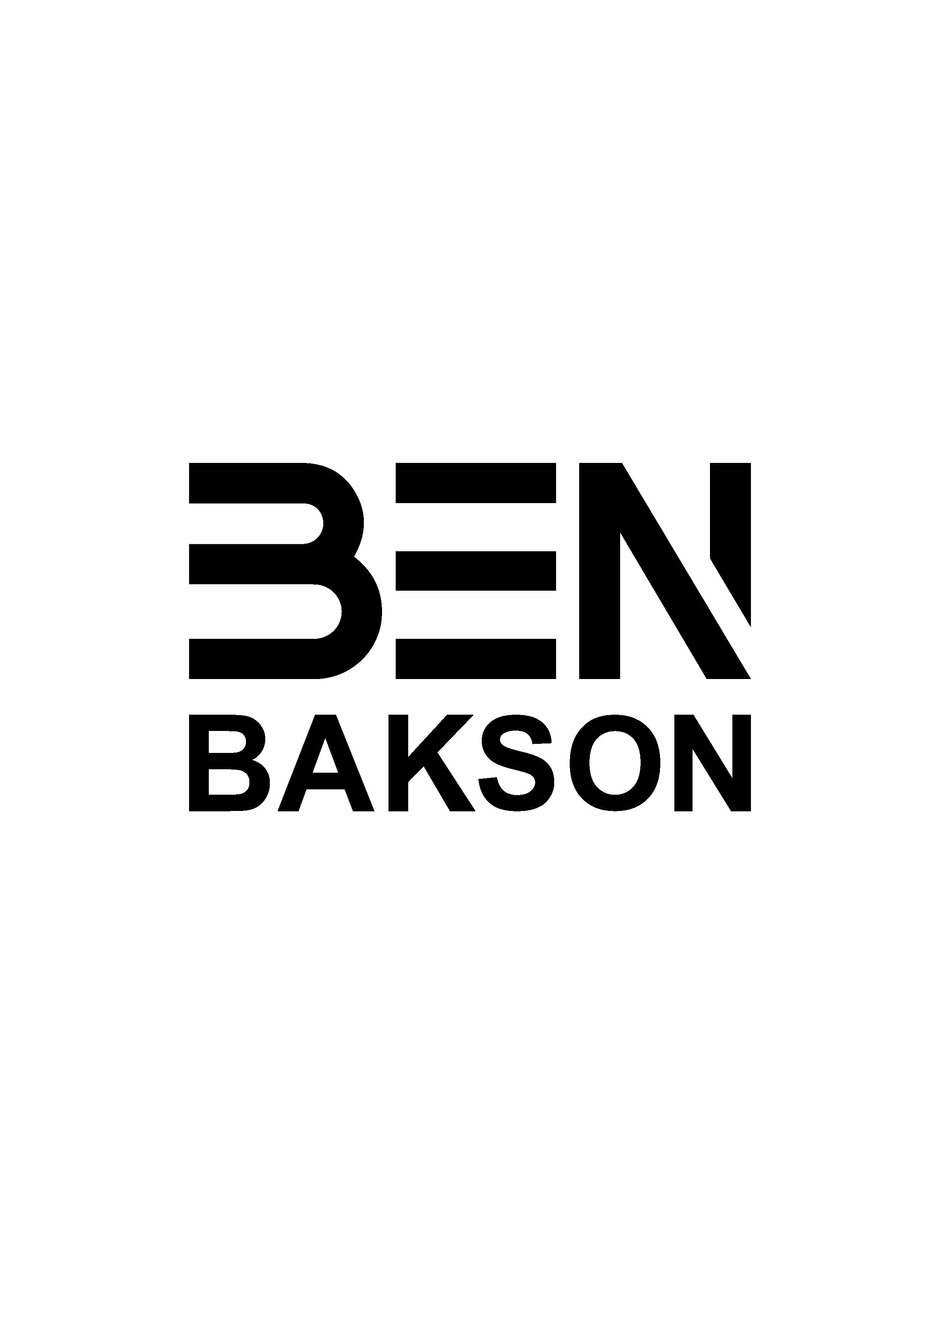 Contact Dj Ben Bakson Management logo